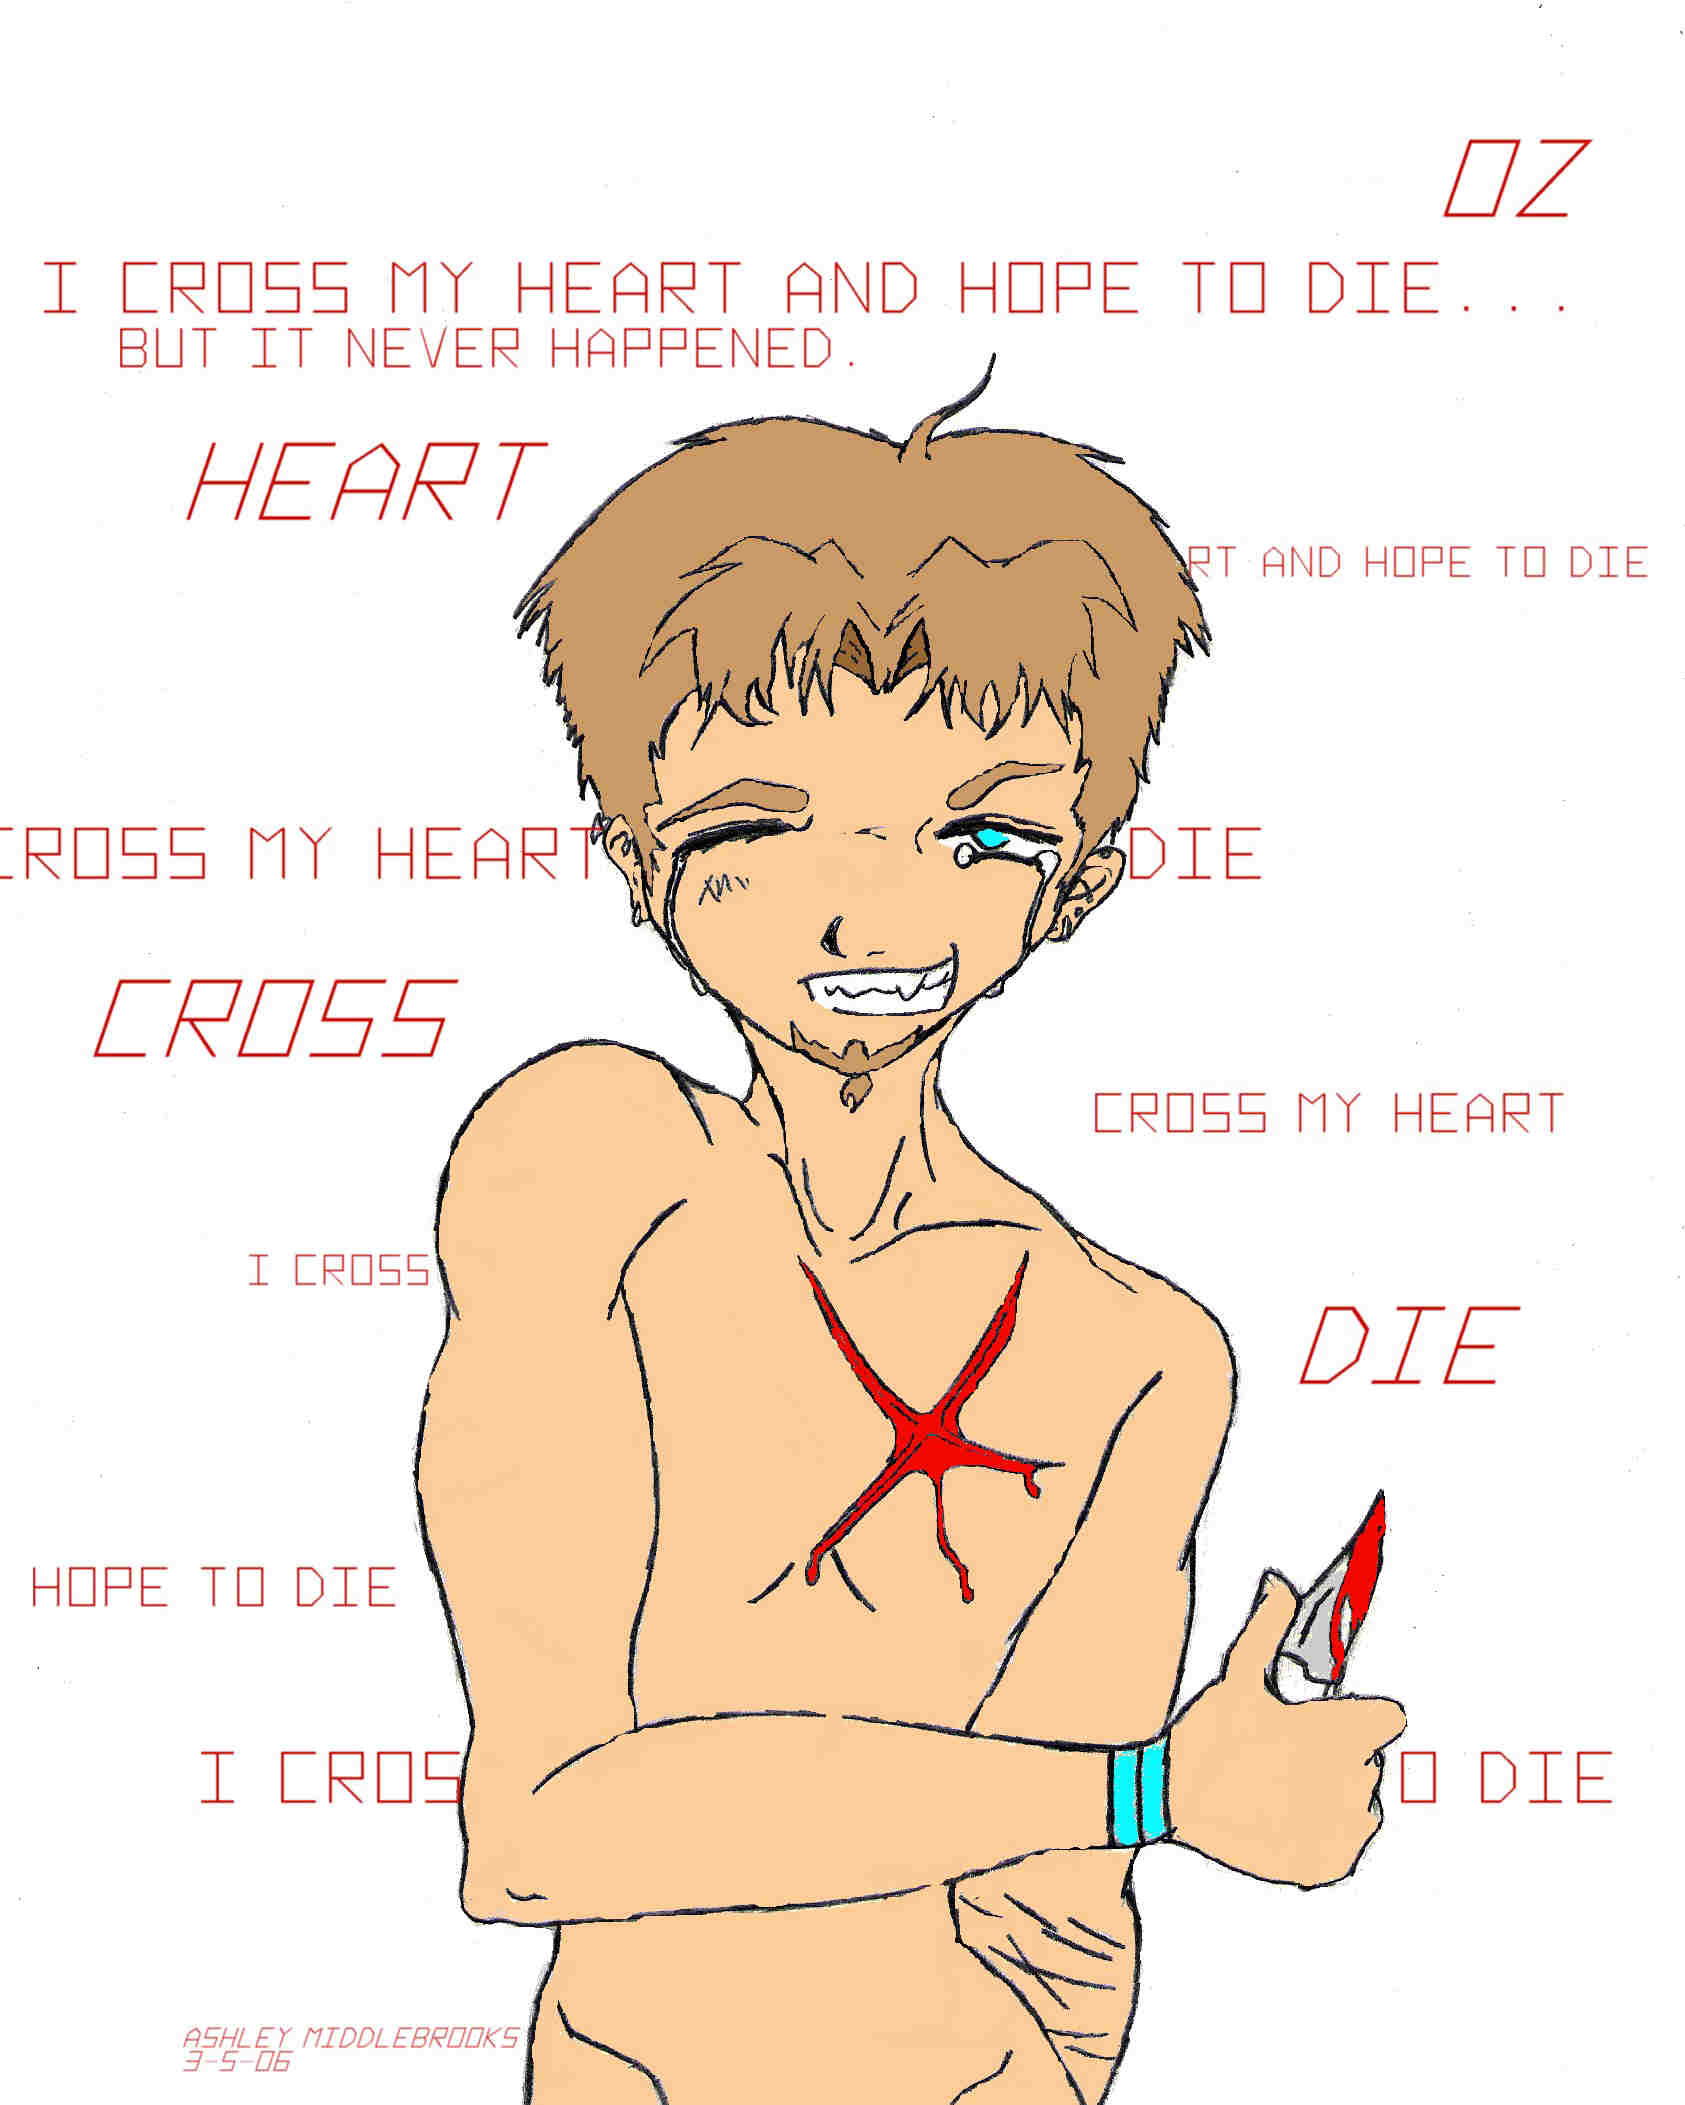 Cross my heart by dms_cheeseshirted_chorusneko